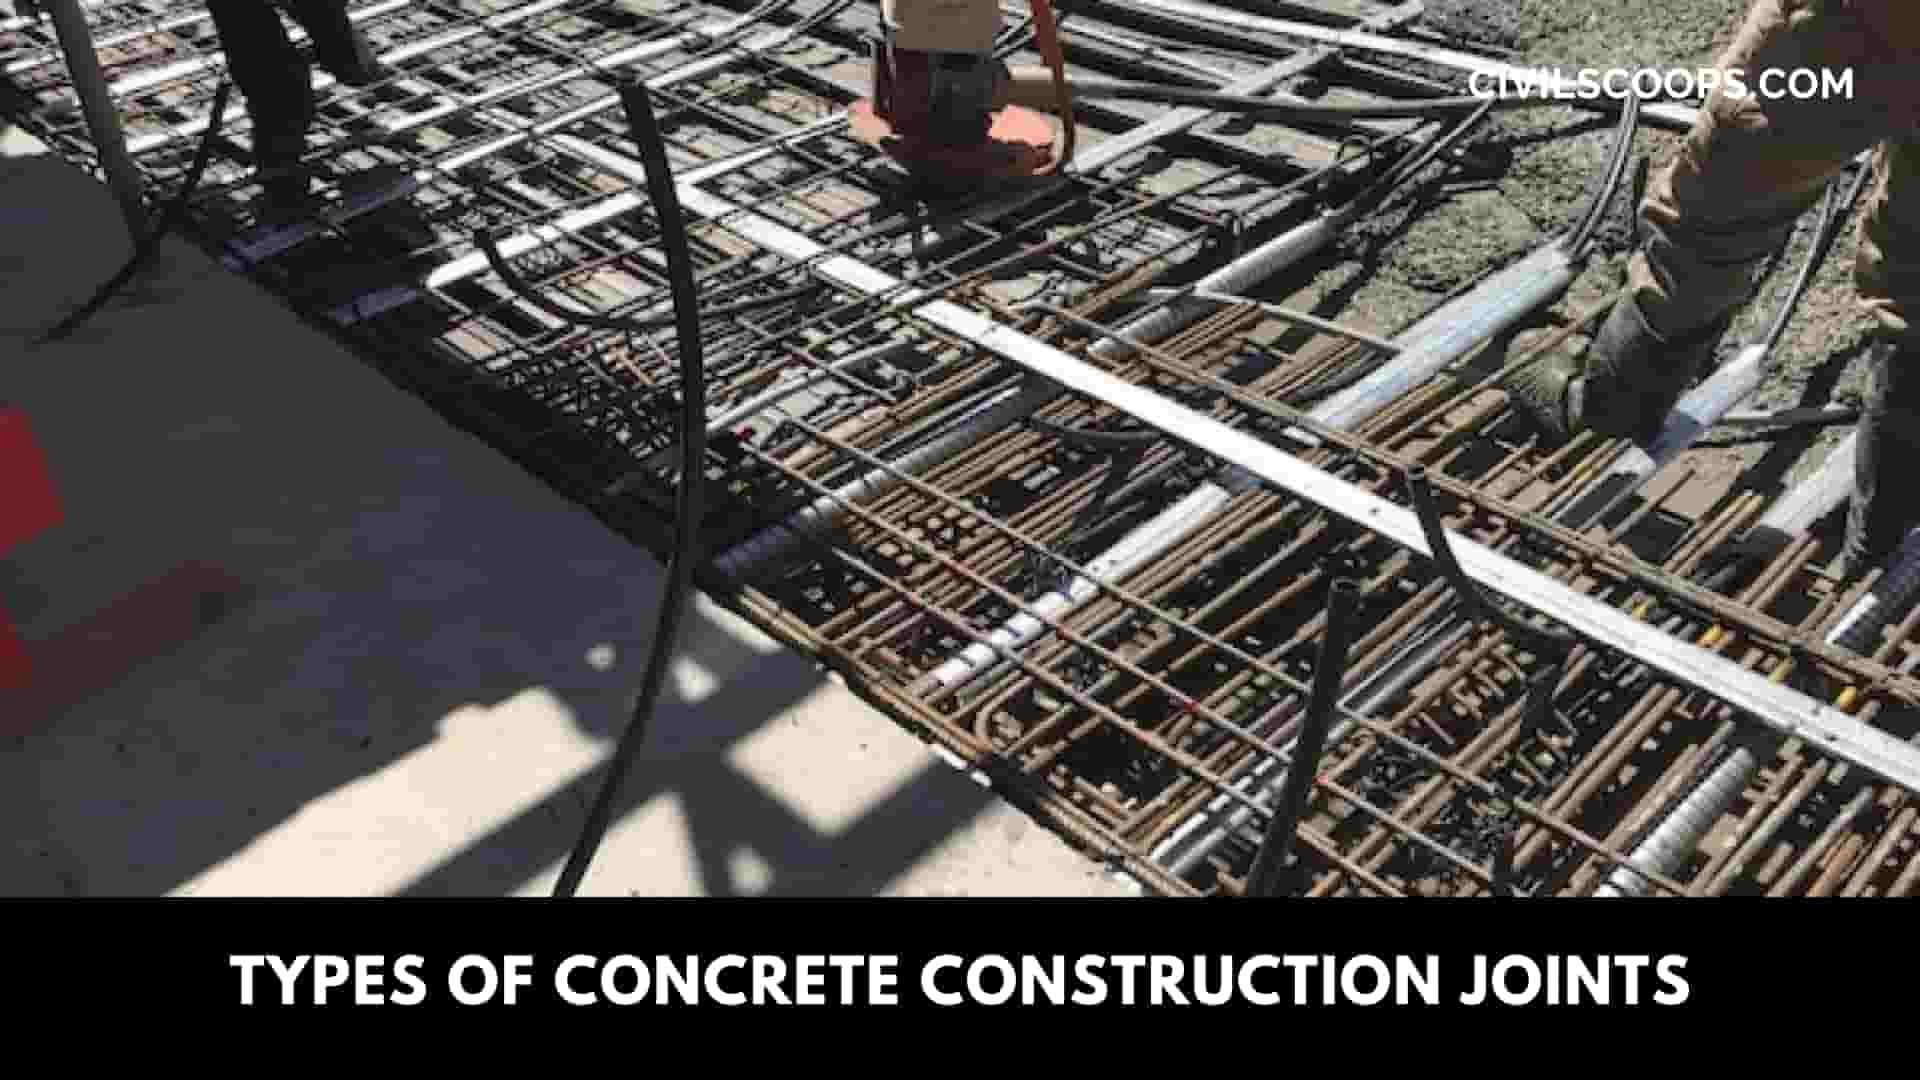 Types of Concrete Construction Joints: